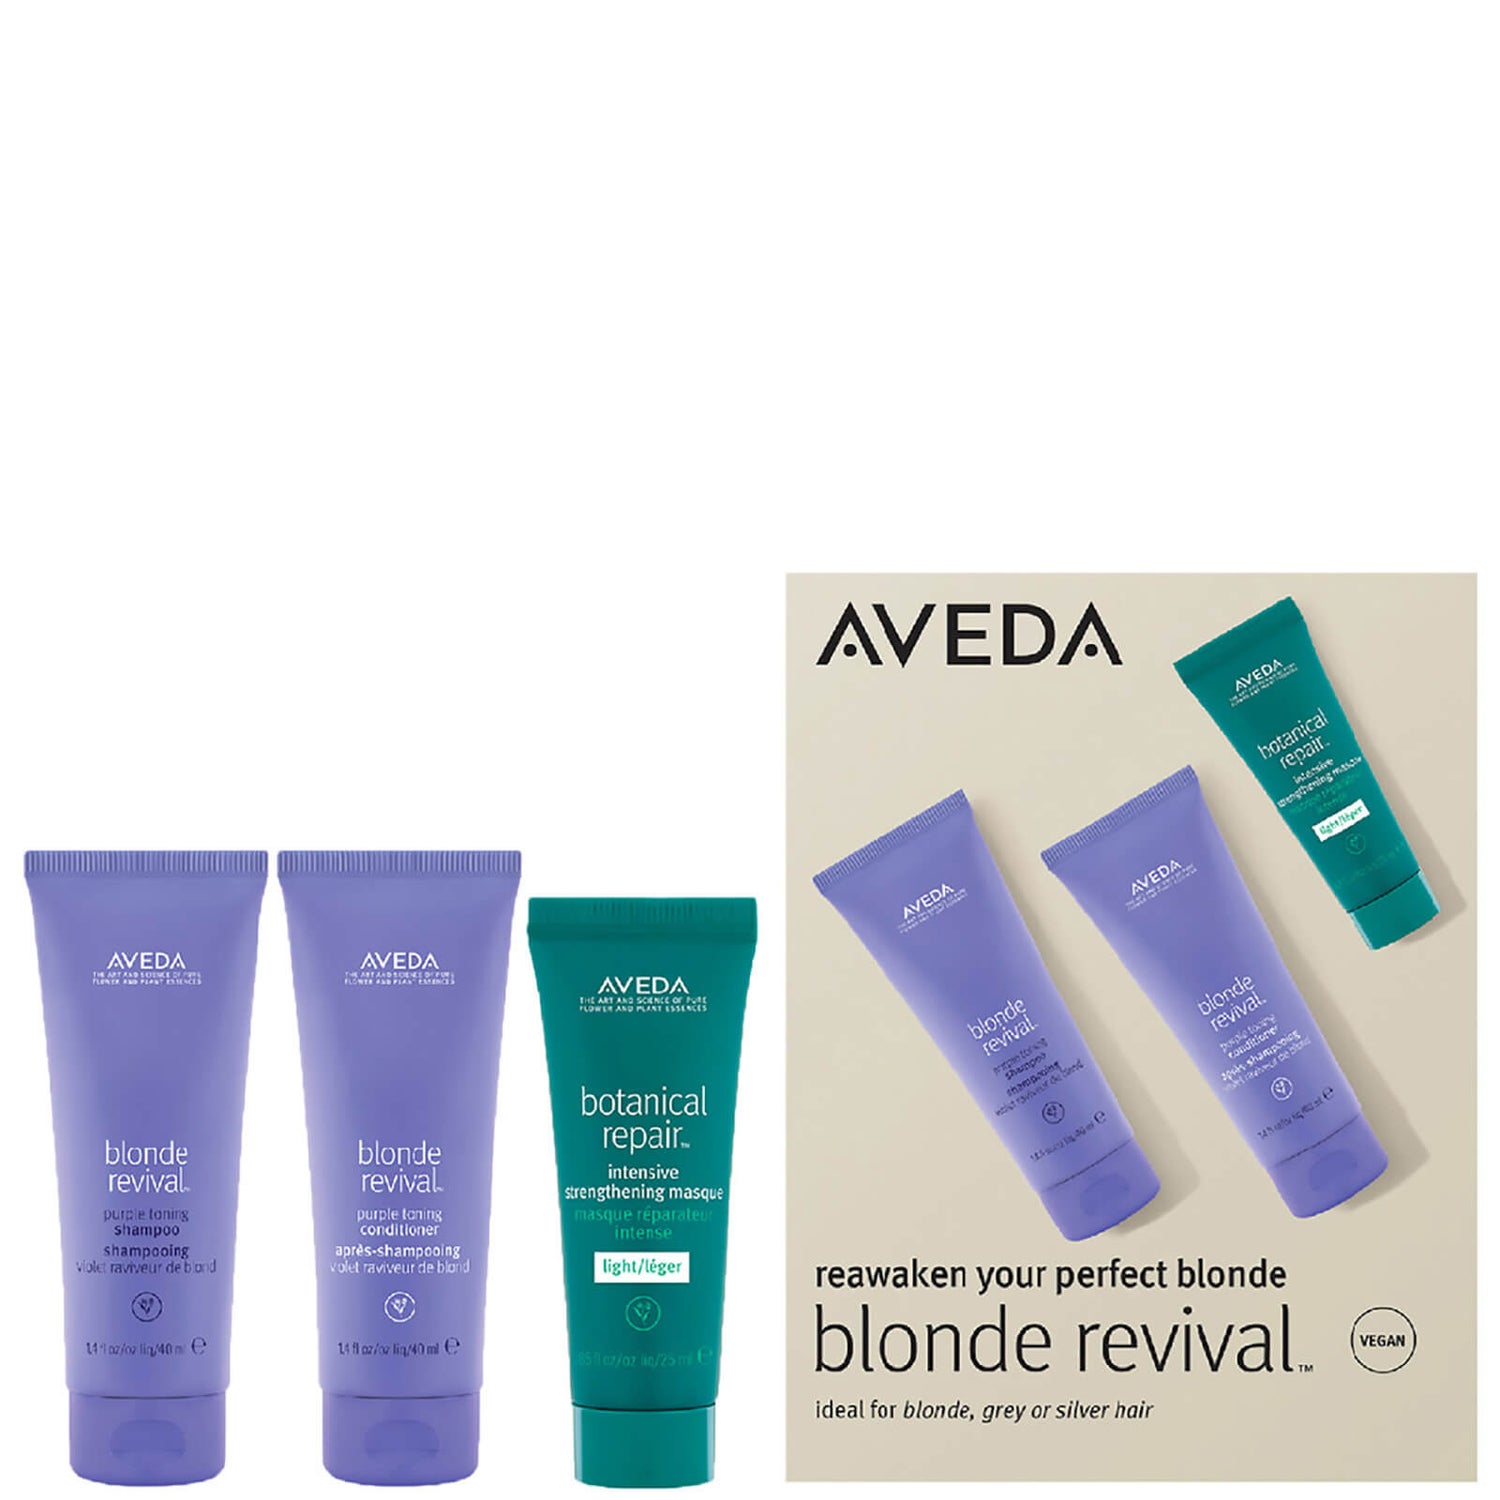 Aveda Blonde Revival Travel Kit (Worth £27.00)